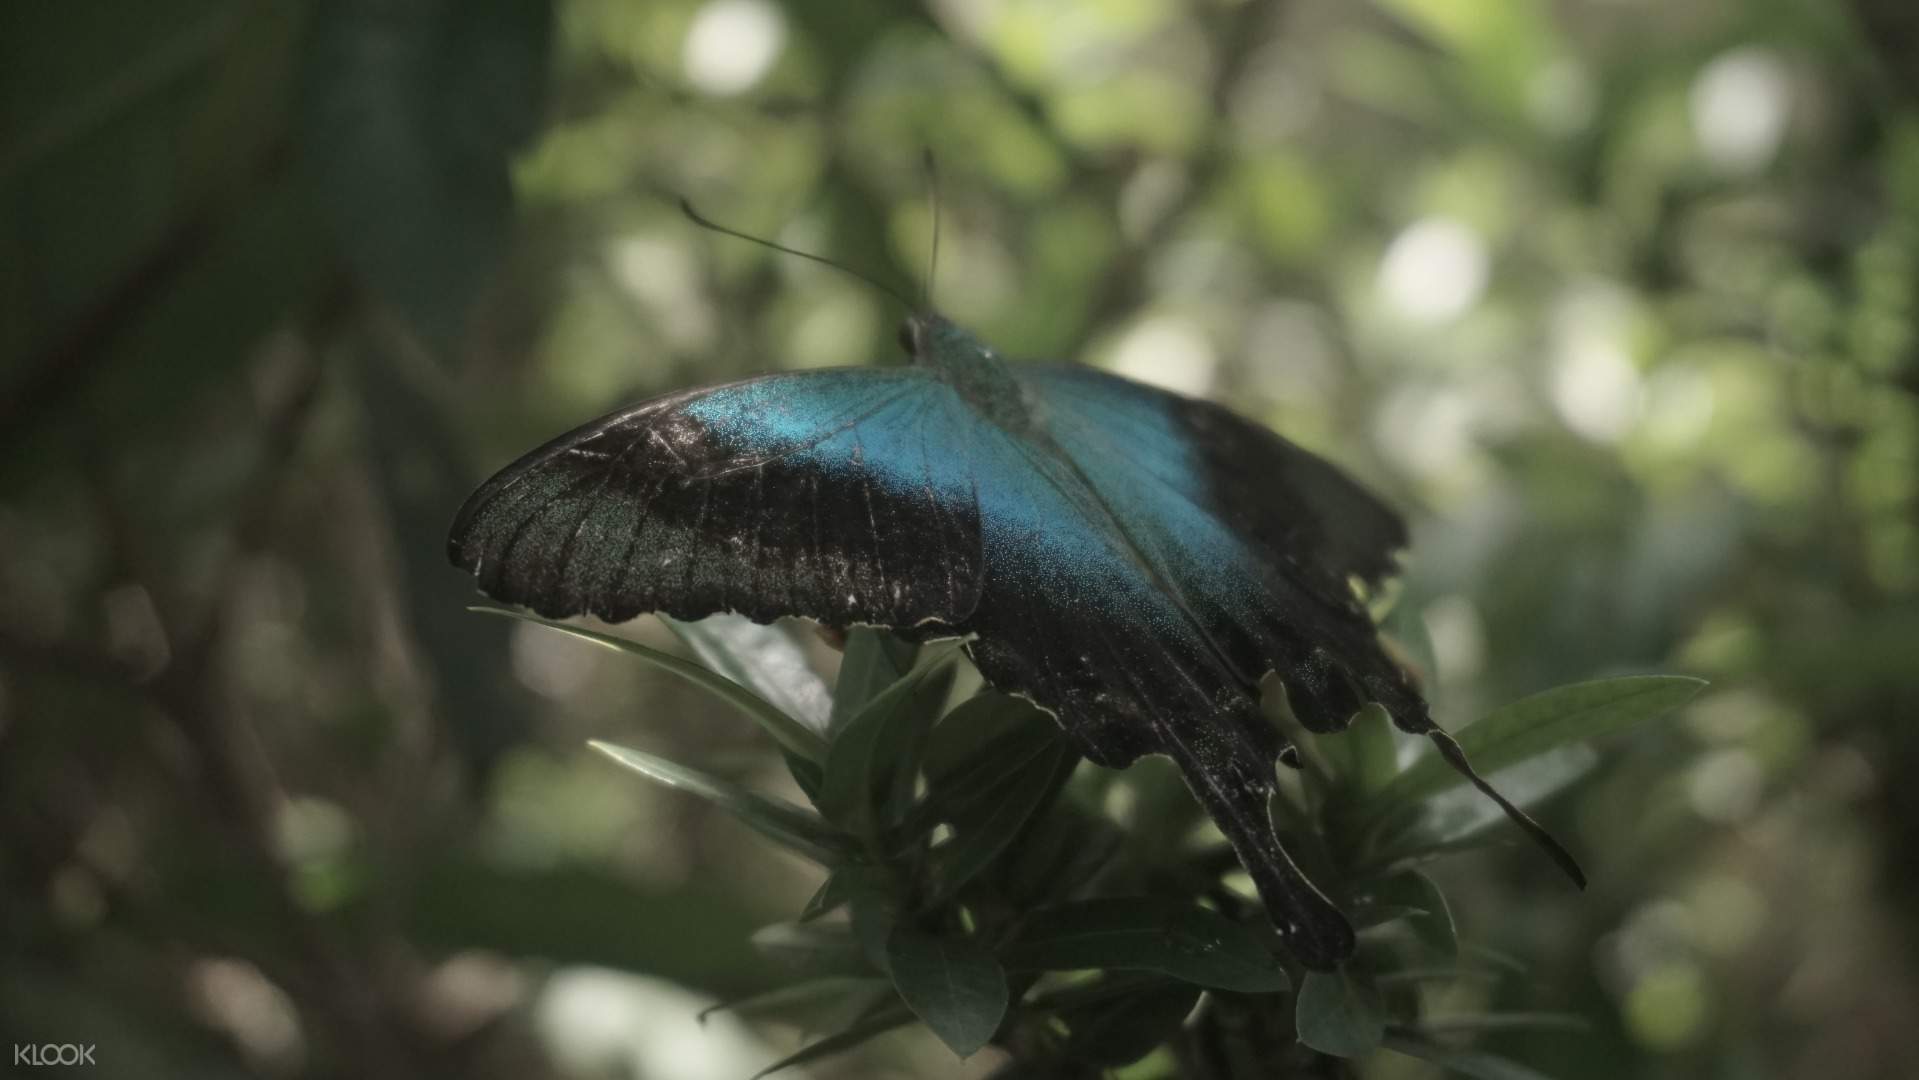 Kemenuh Butterfly Park Ticket In Bali